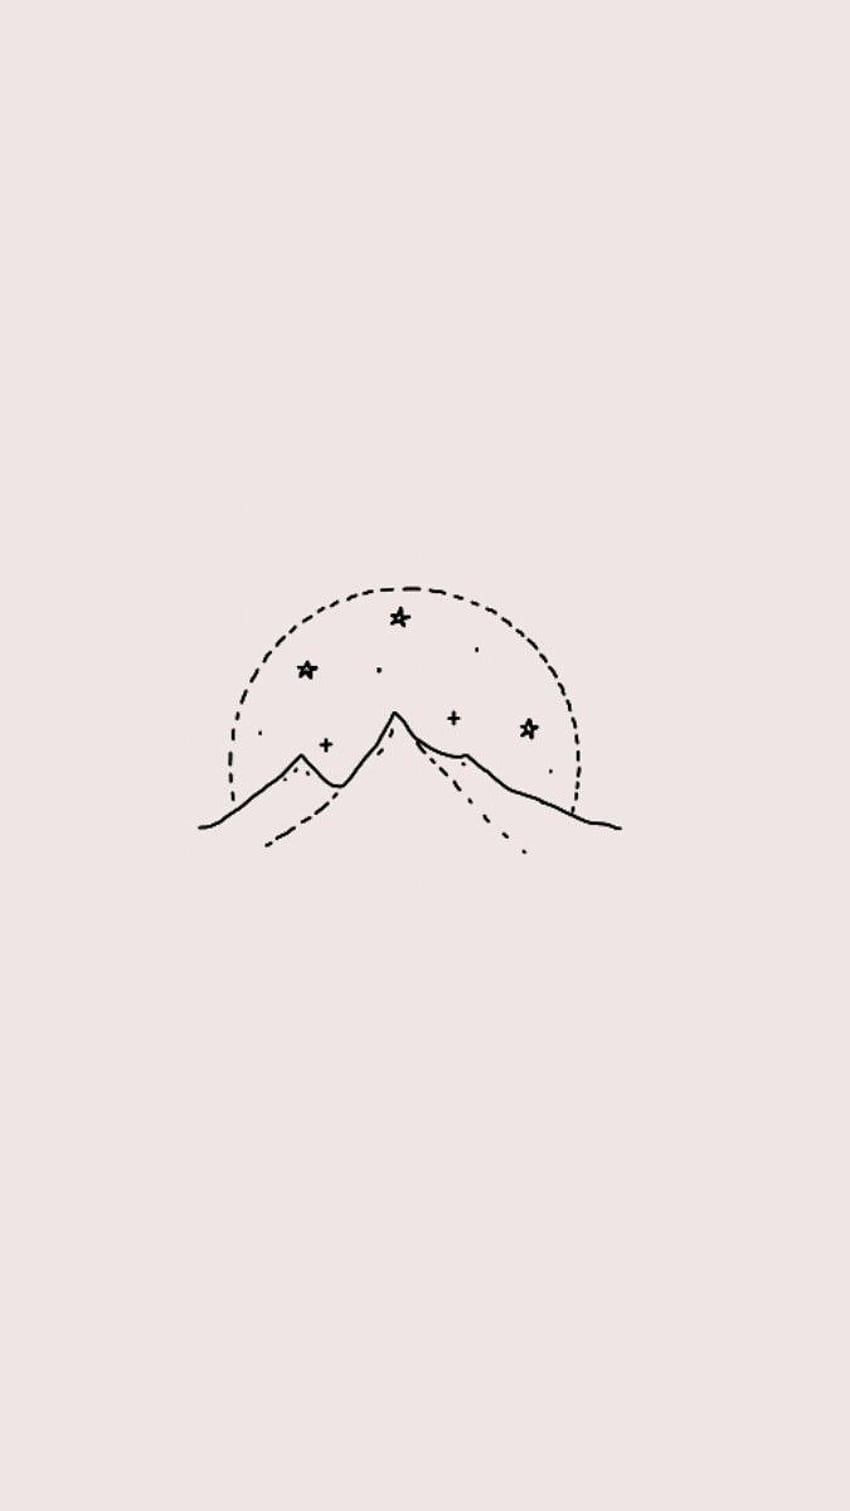 A minimalist illustration of a mountain range with a sun and stars. - Minimalist, clean, pastel minimalist